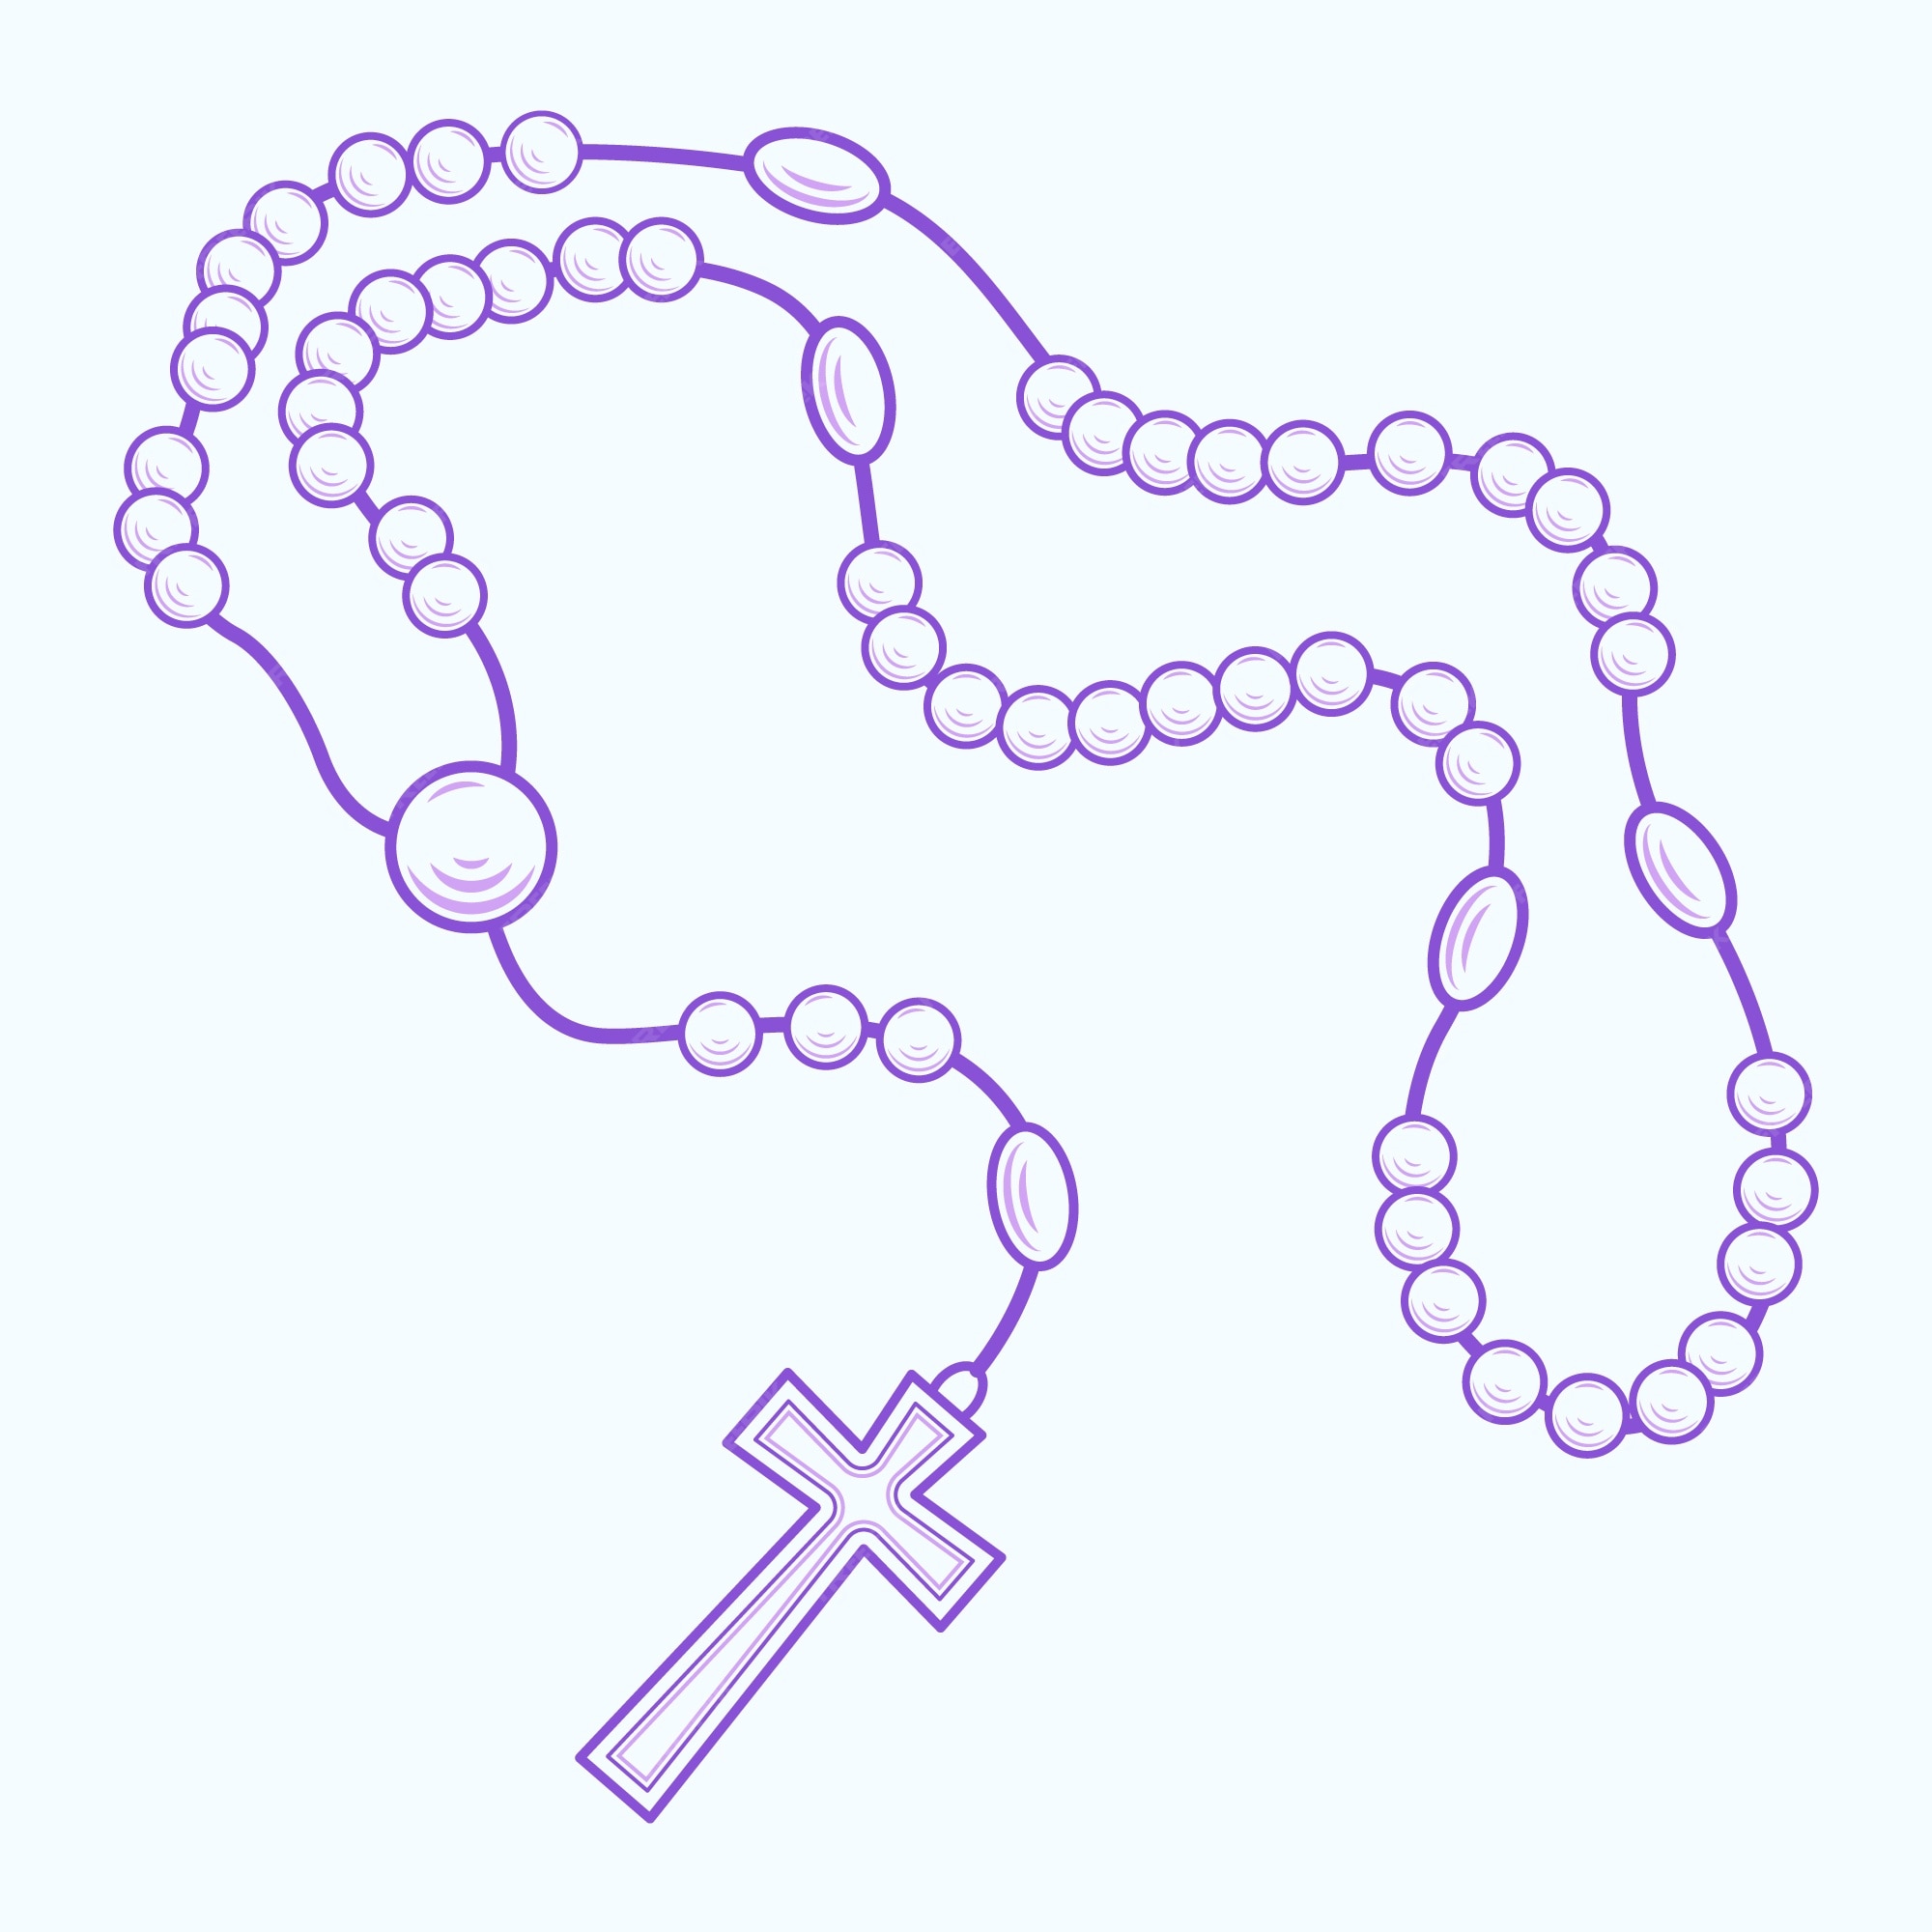 Catholic rosary Images | Free Vectors, Stock Photos & PSD